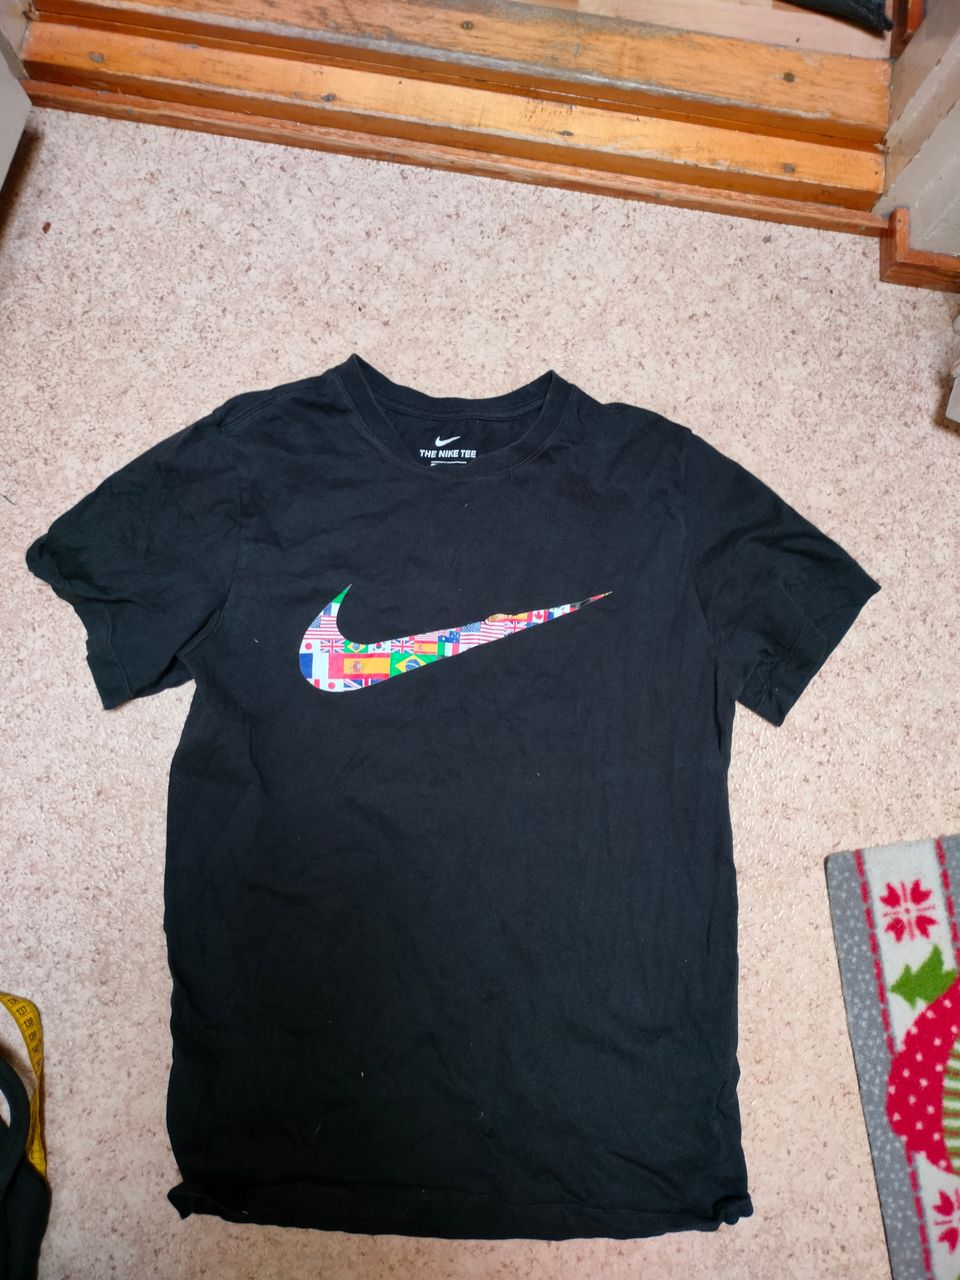 Nike t-paita